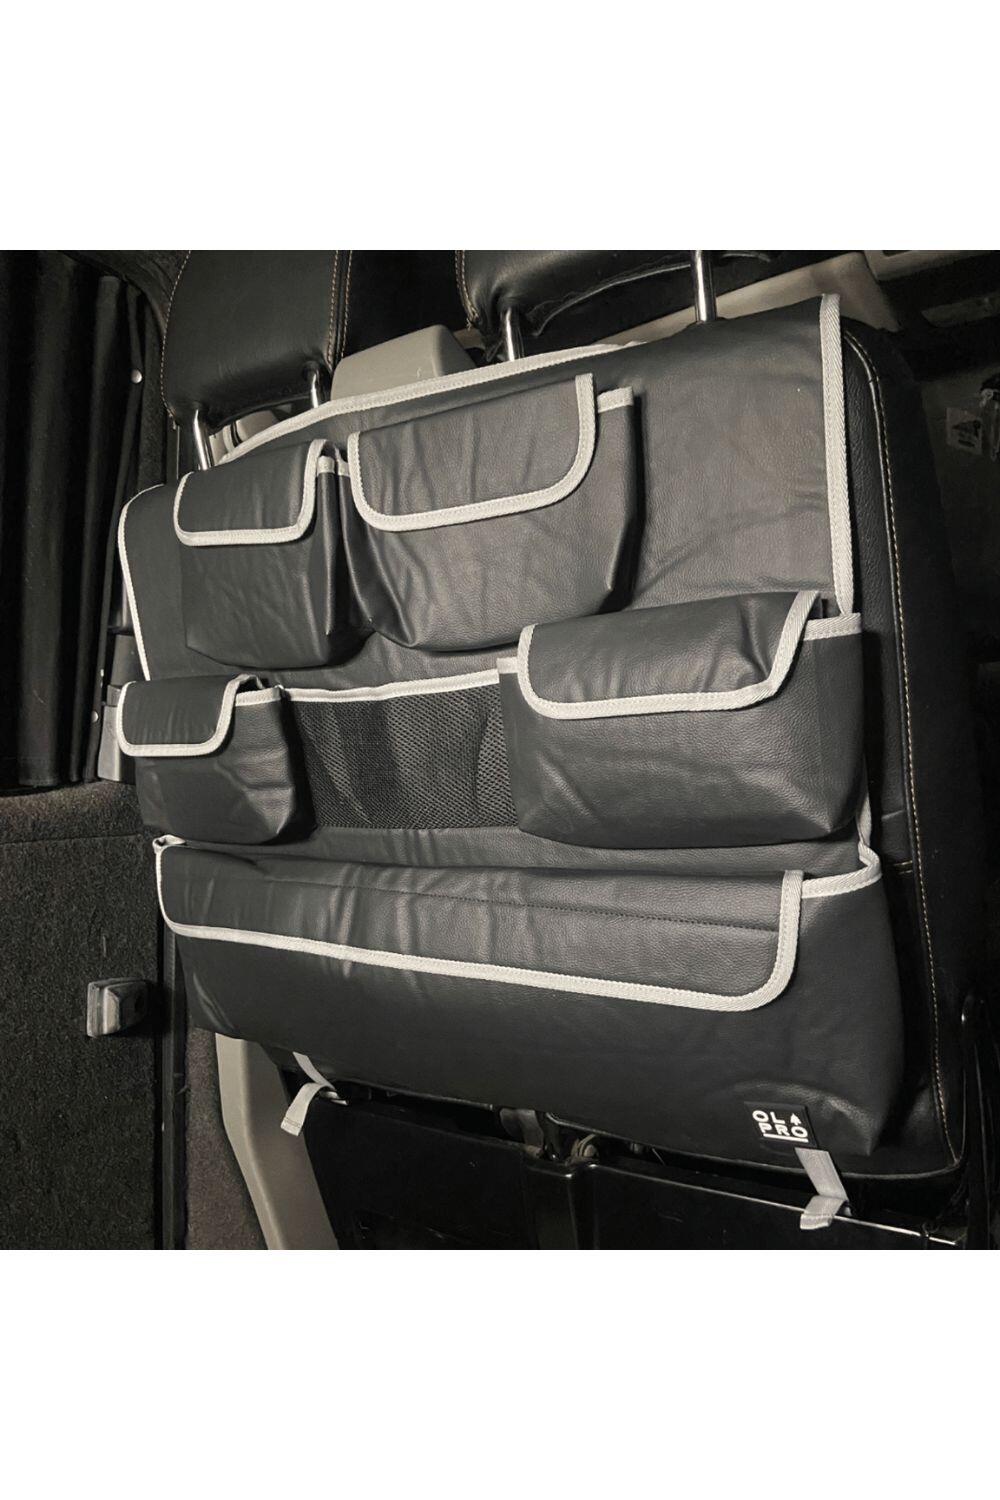 OLPRO Double Seat Organiser Grey 3/3